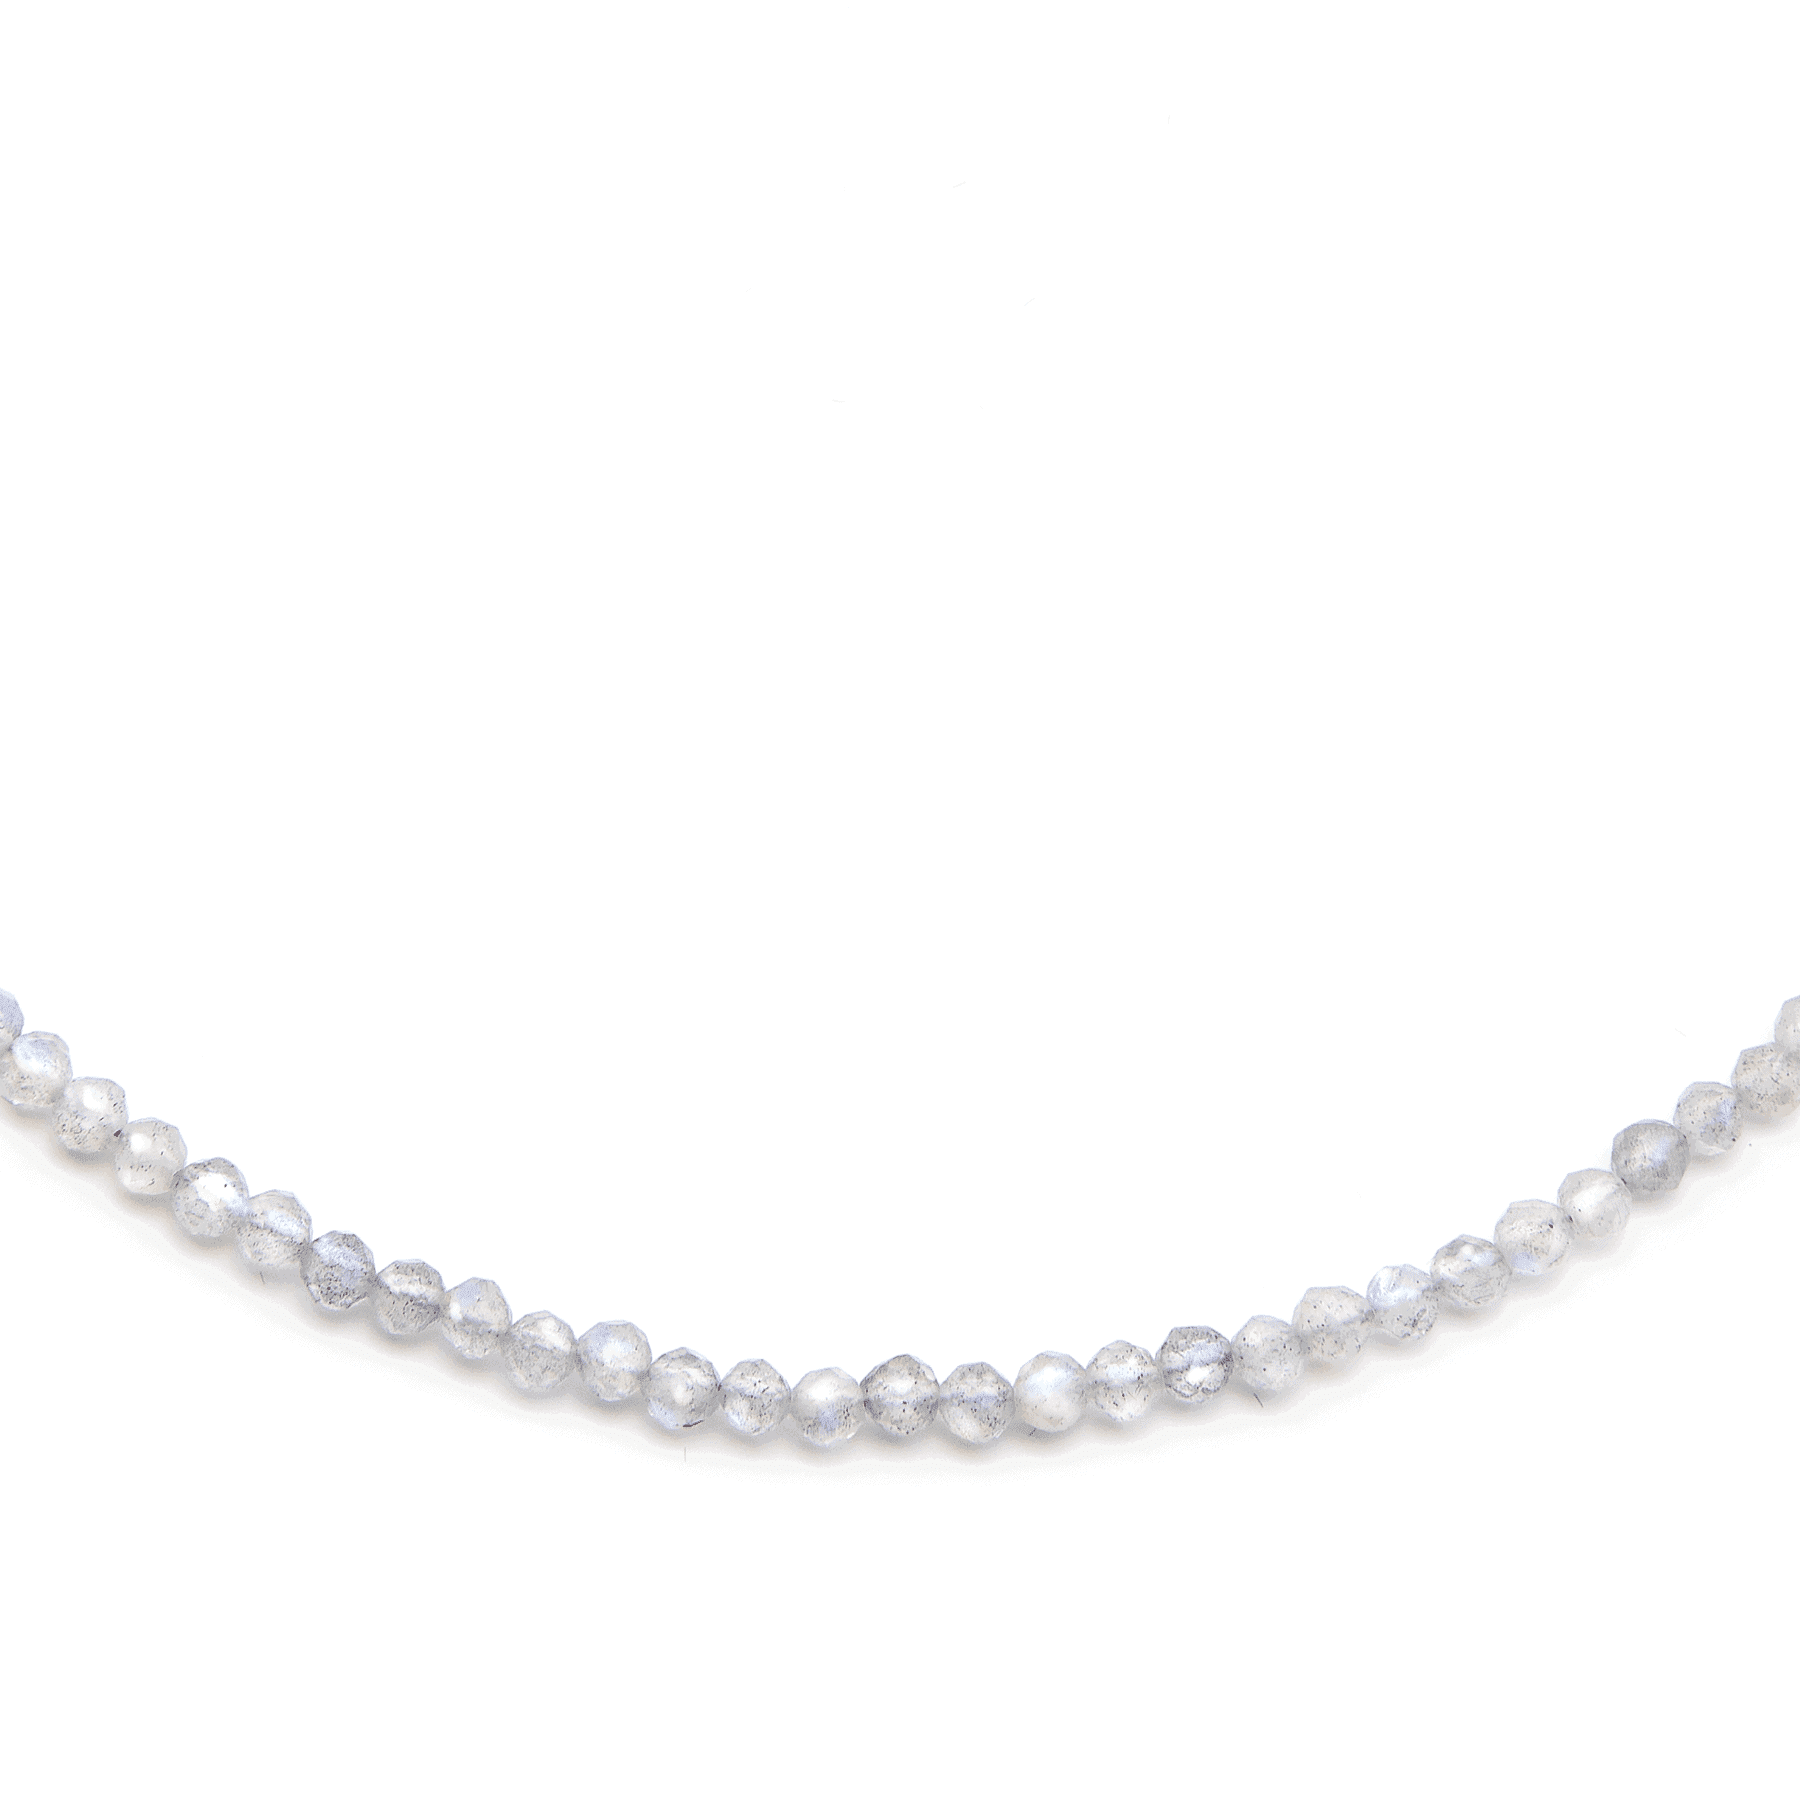 Labradorite necklace on white background.